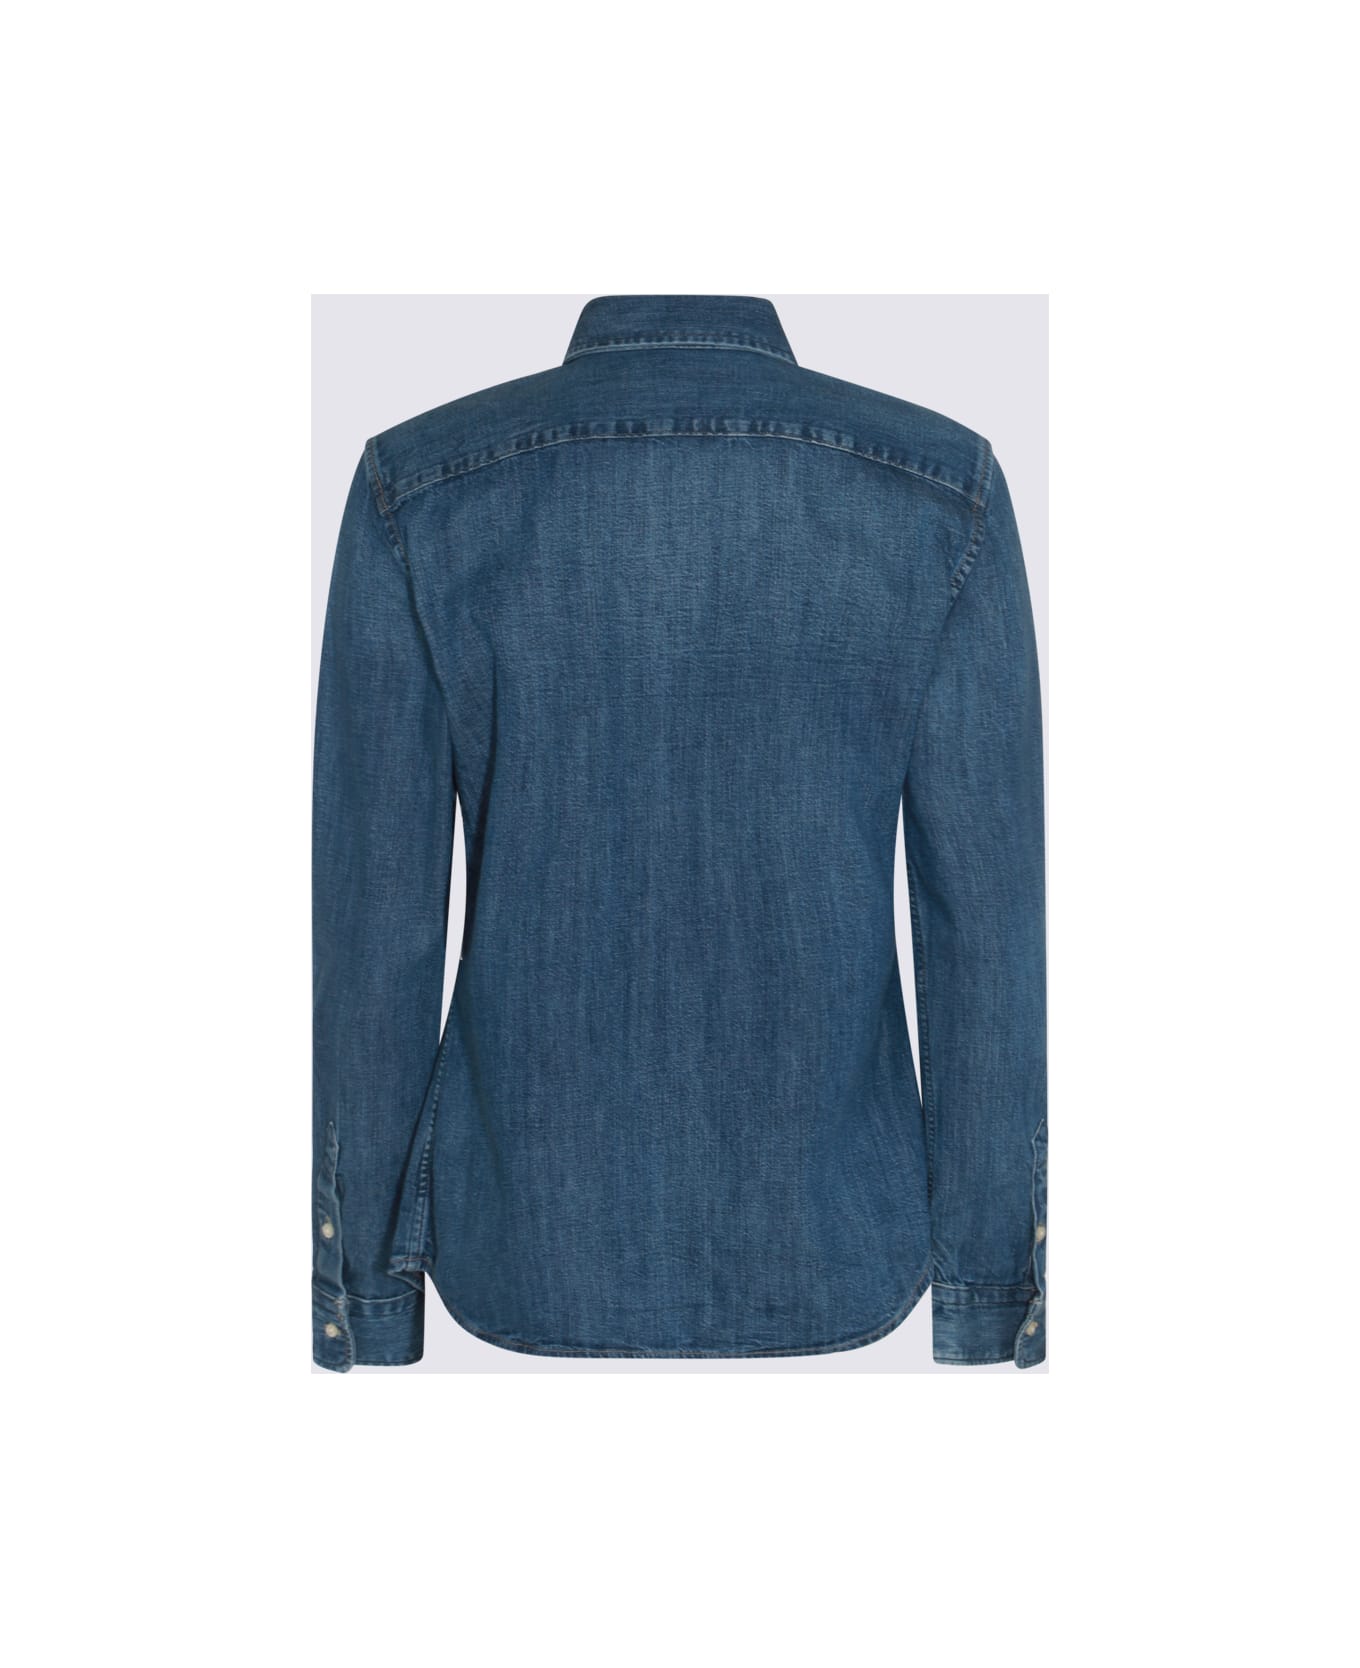 Polo Ralph Lauren Blue Cotton Denim Shirt - MERCED WASH